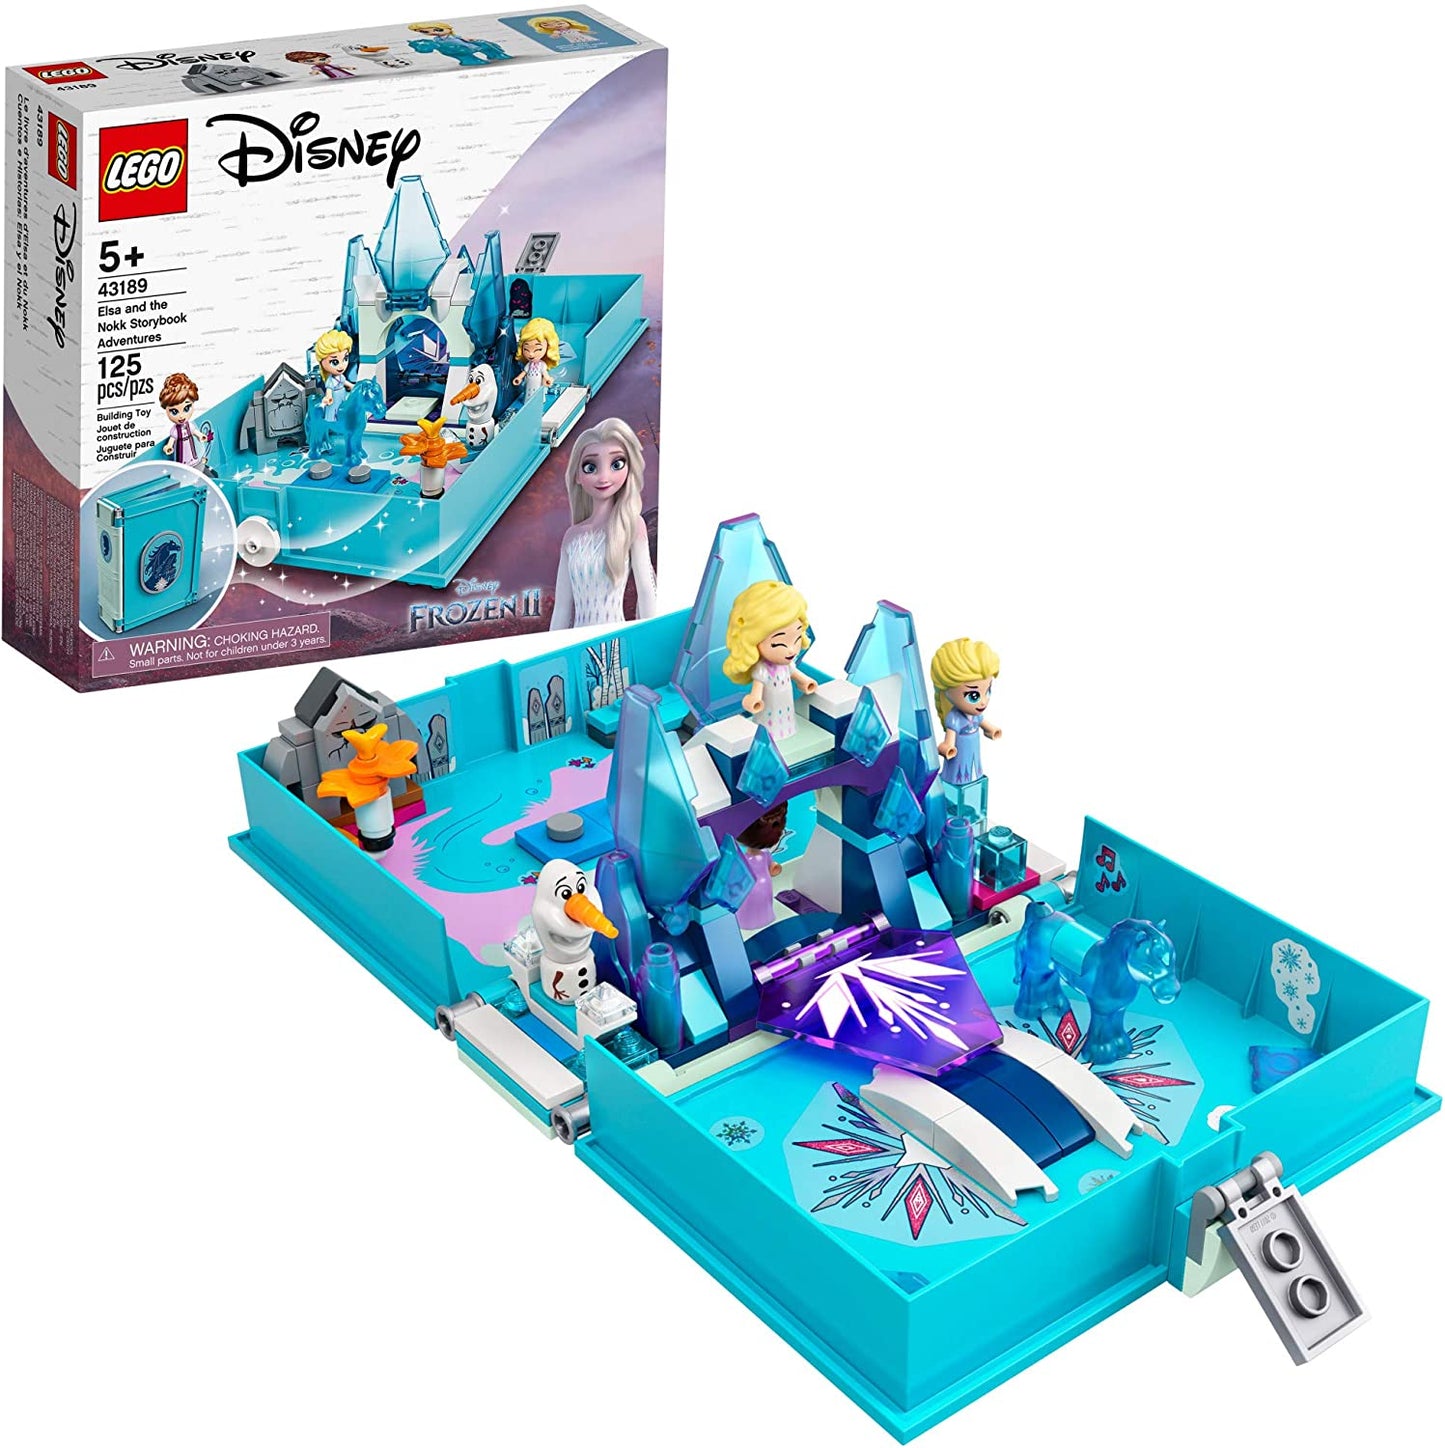 LEGO Disney - Elsa and The Nokk Storybook Adventures 43189